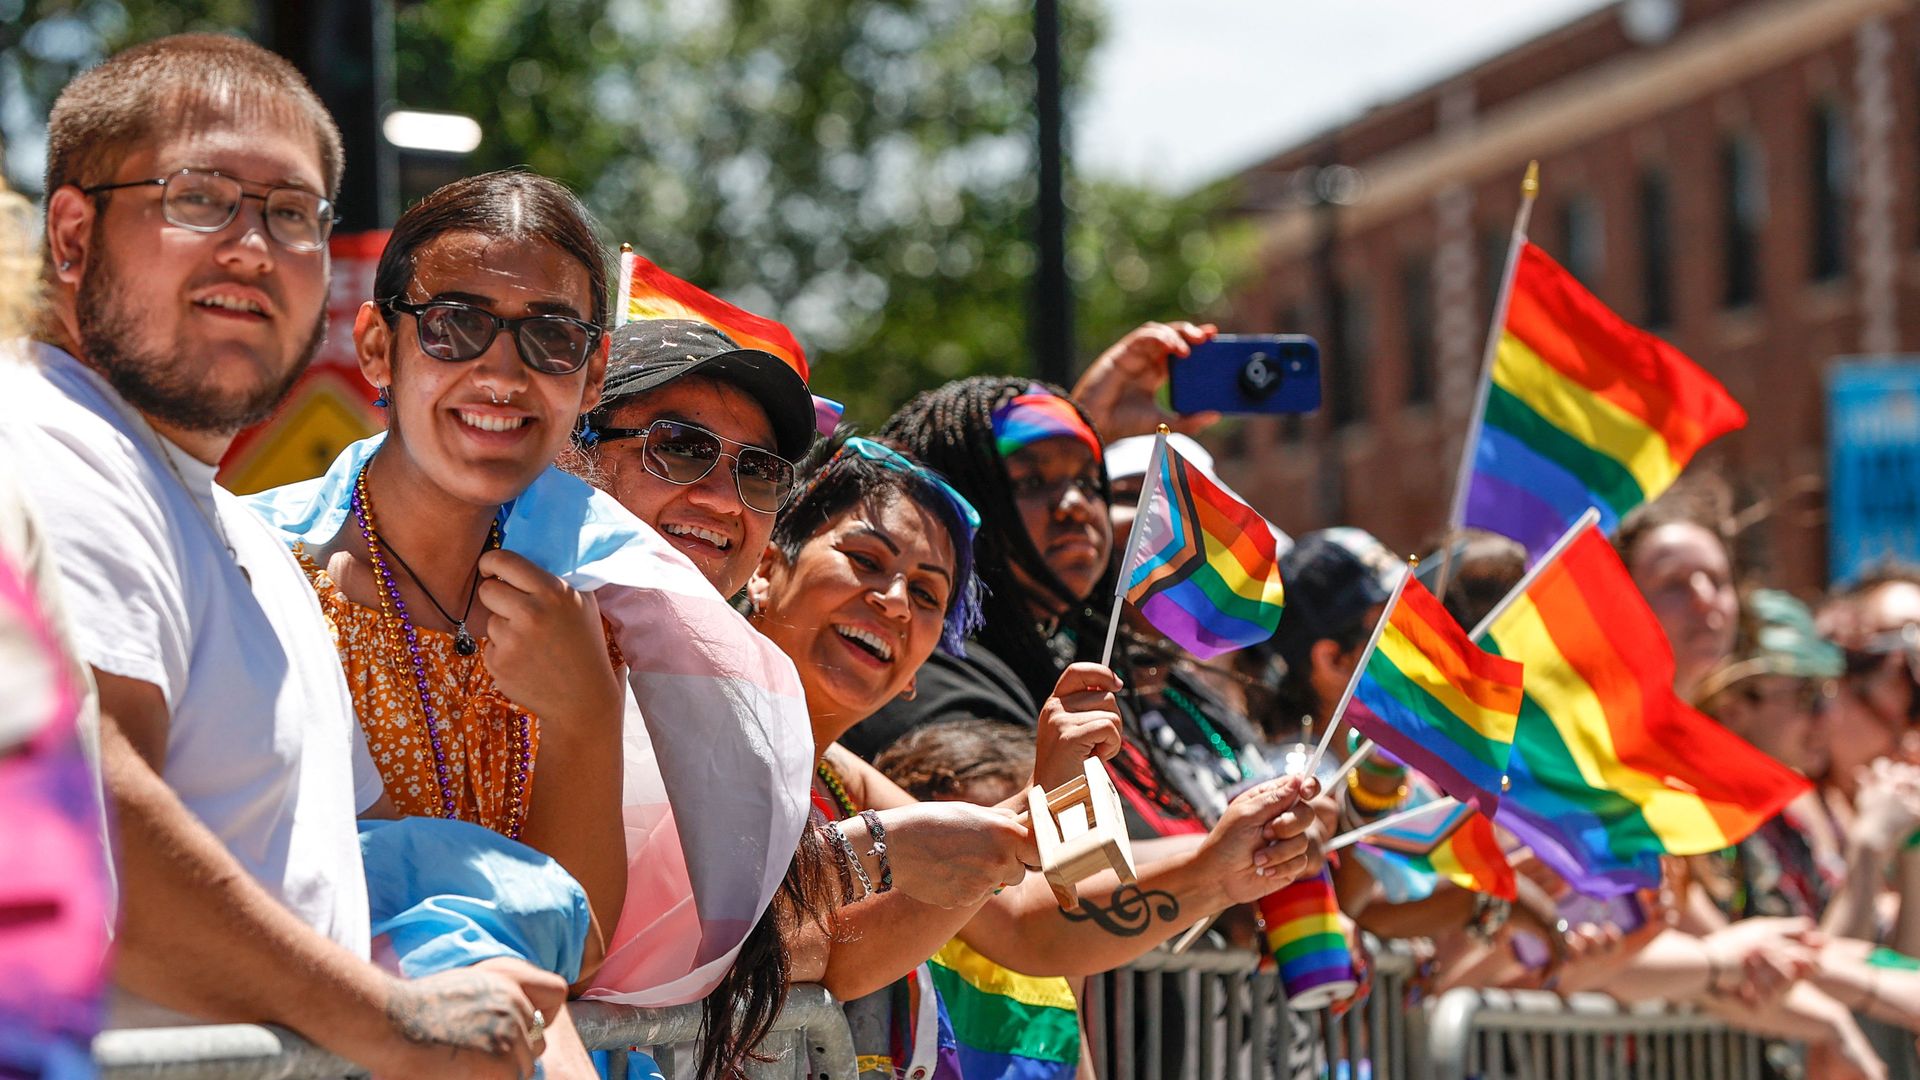 Photos Capturing Chicagos Pride Parade Over The Years Axios Chicago 4661